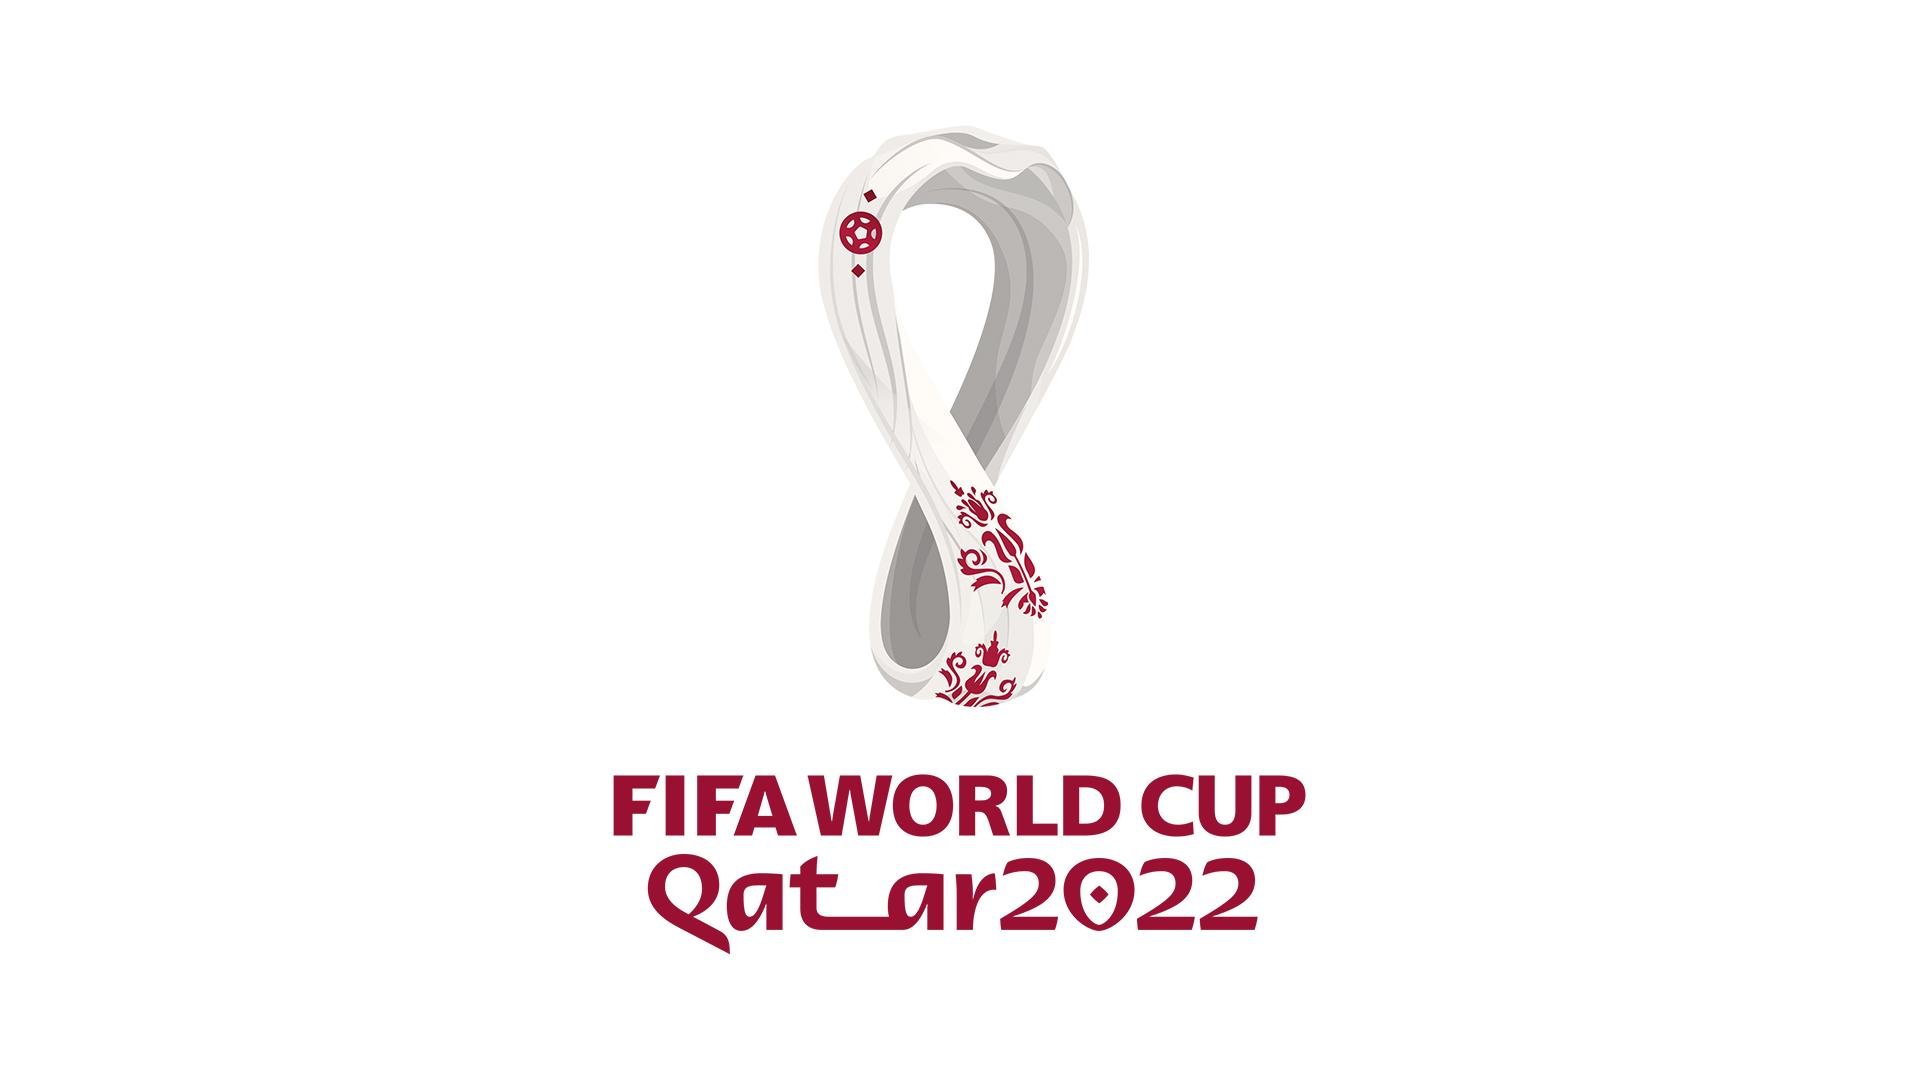 FIFA World Cup Qatar 2022 Wallpaper 1 by nc3studios08 on